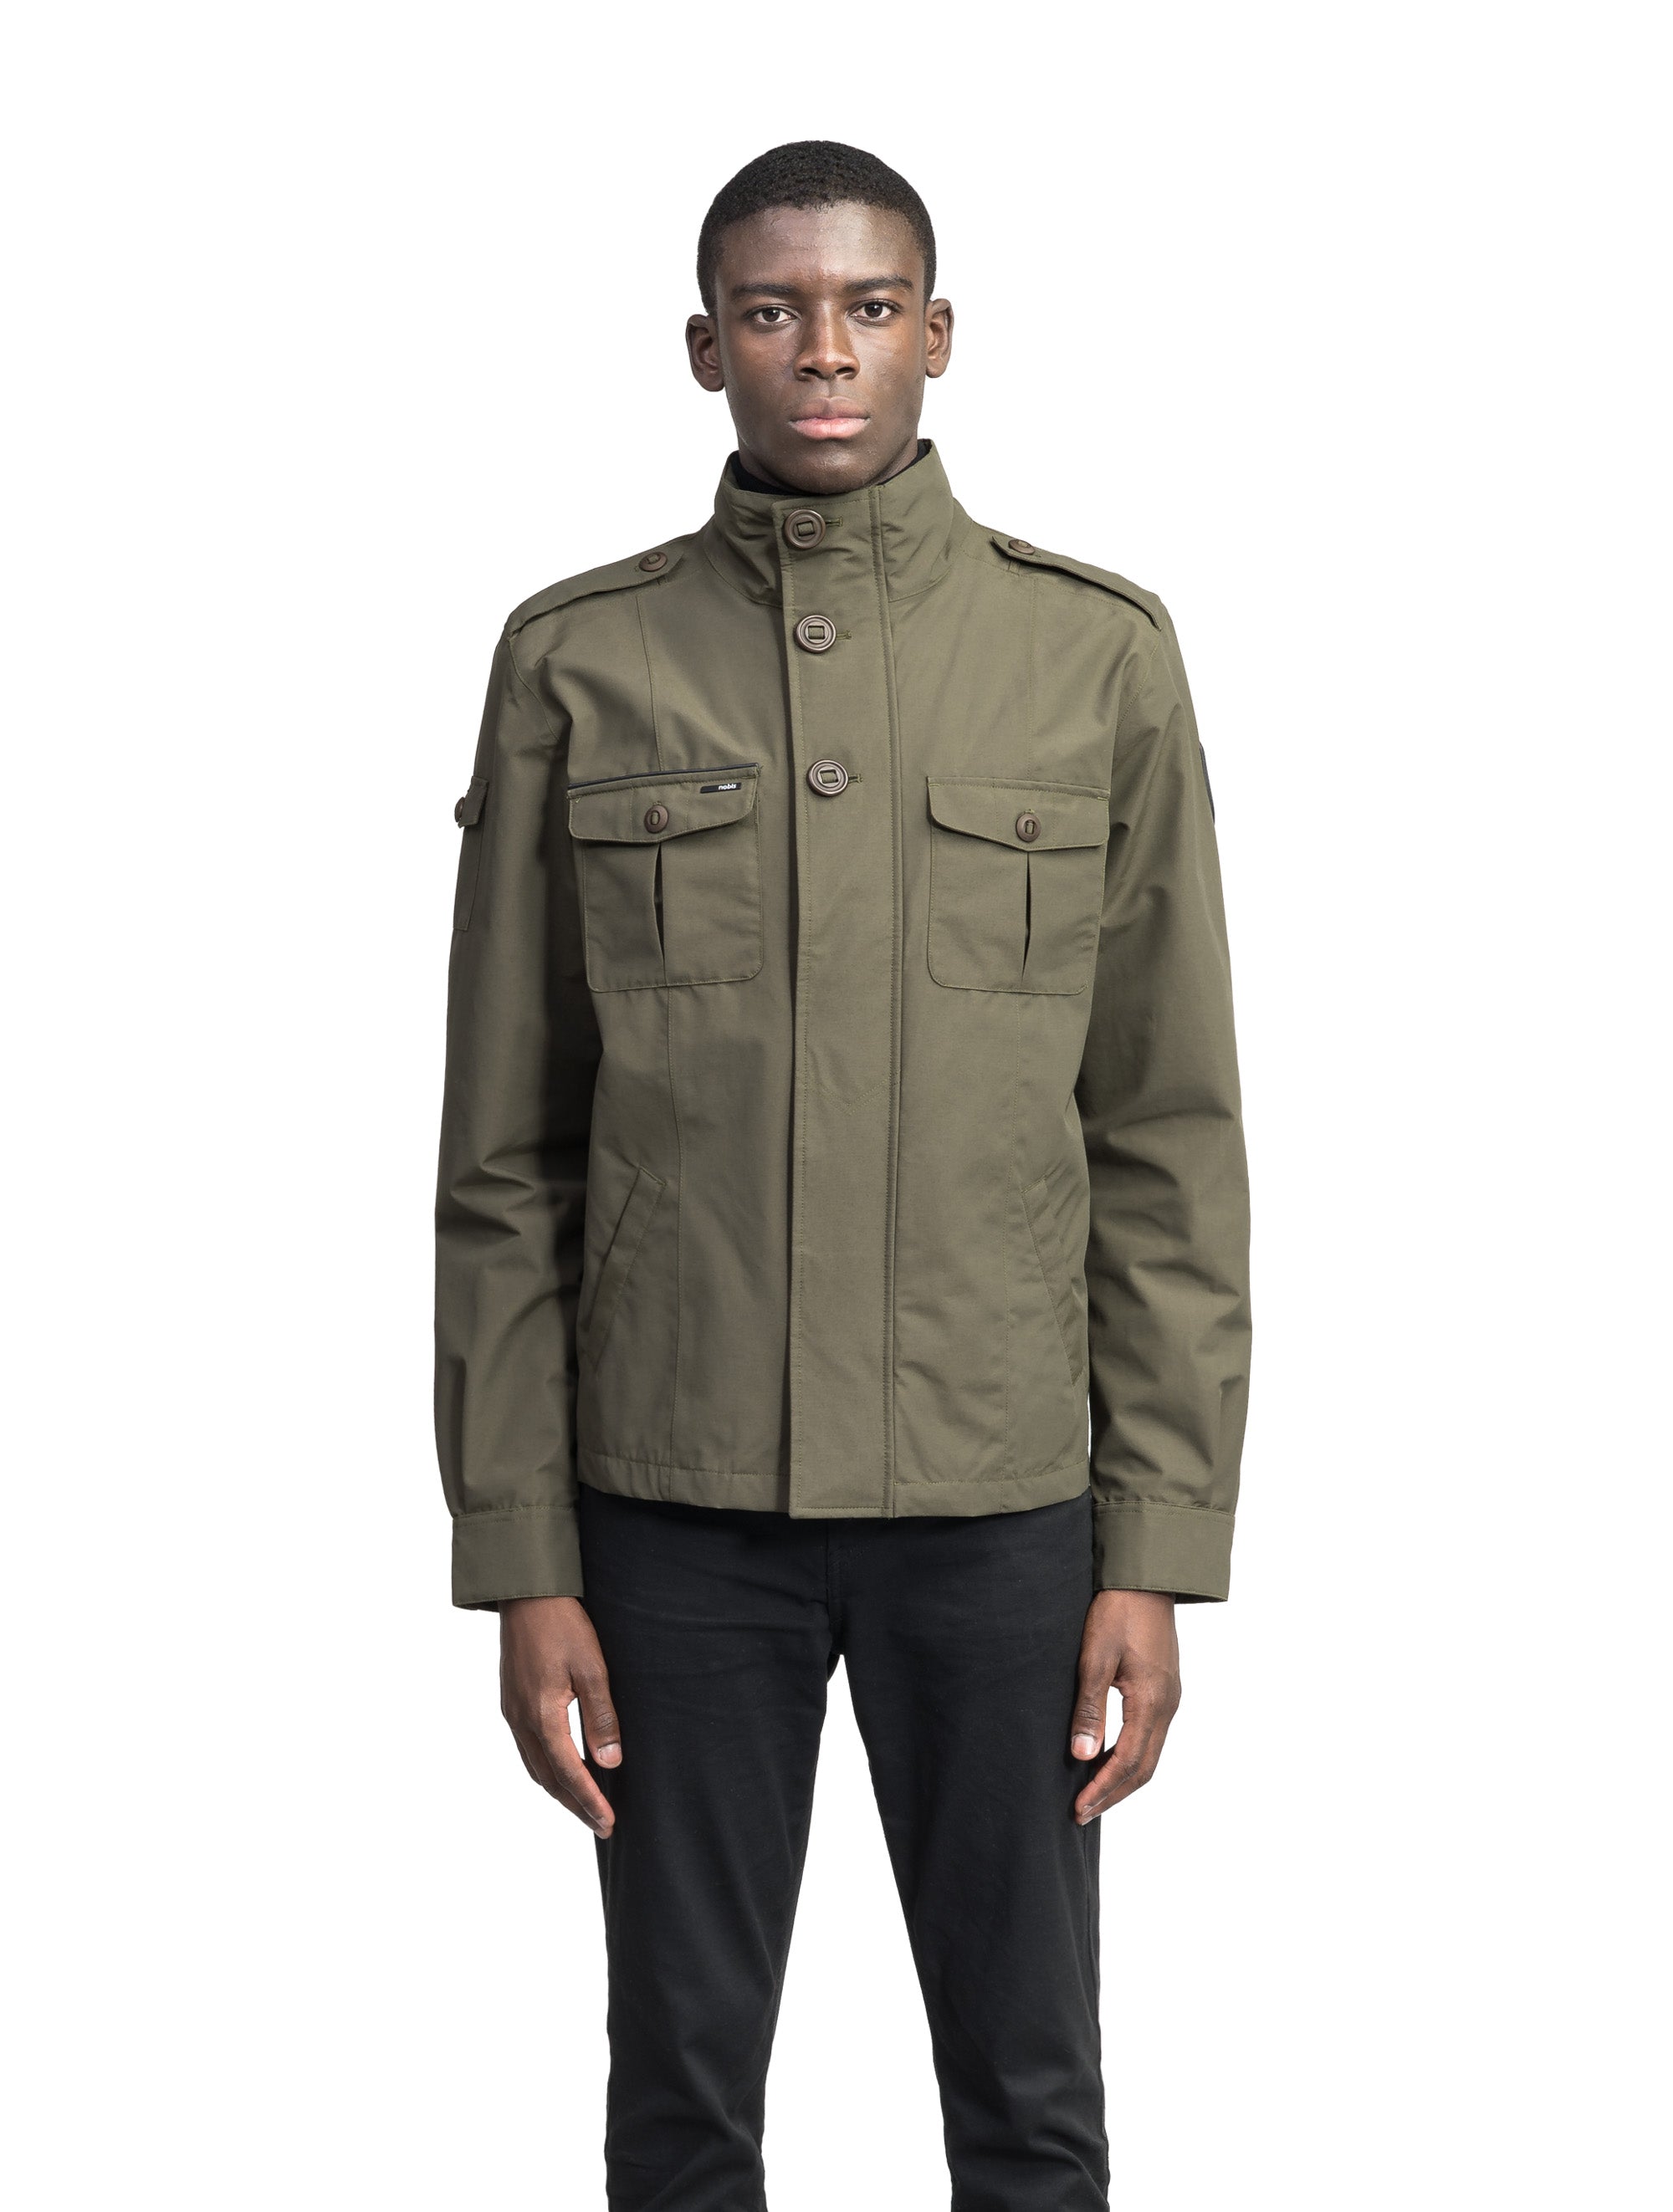 Cargo Jacket | Men's Military Style Jackets | MAGCOMSEN